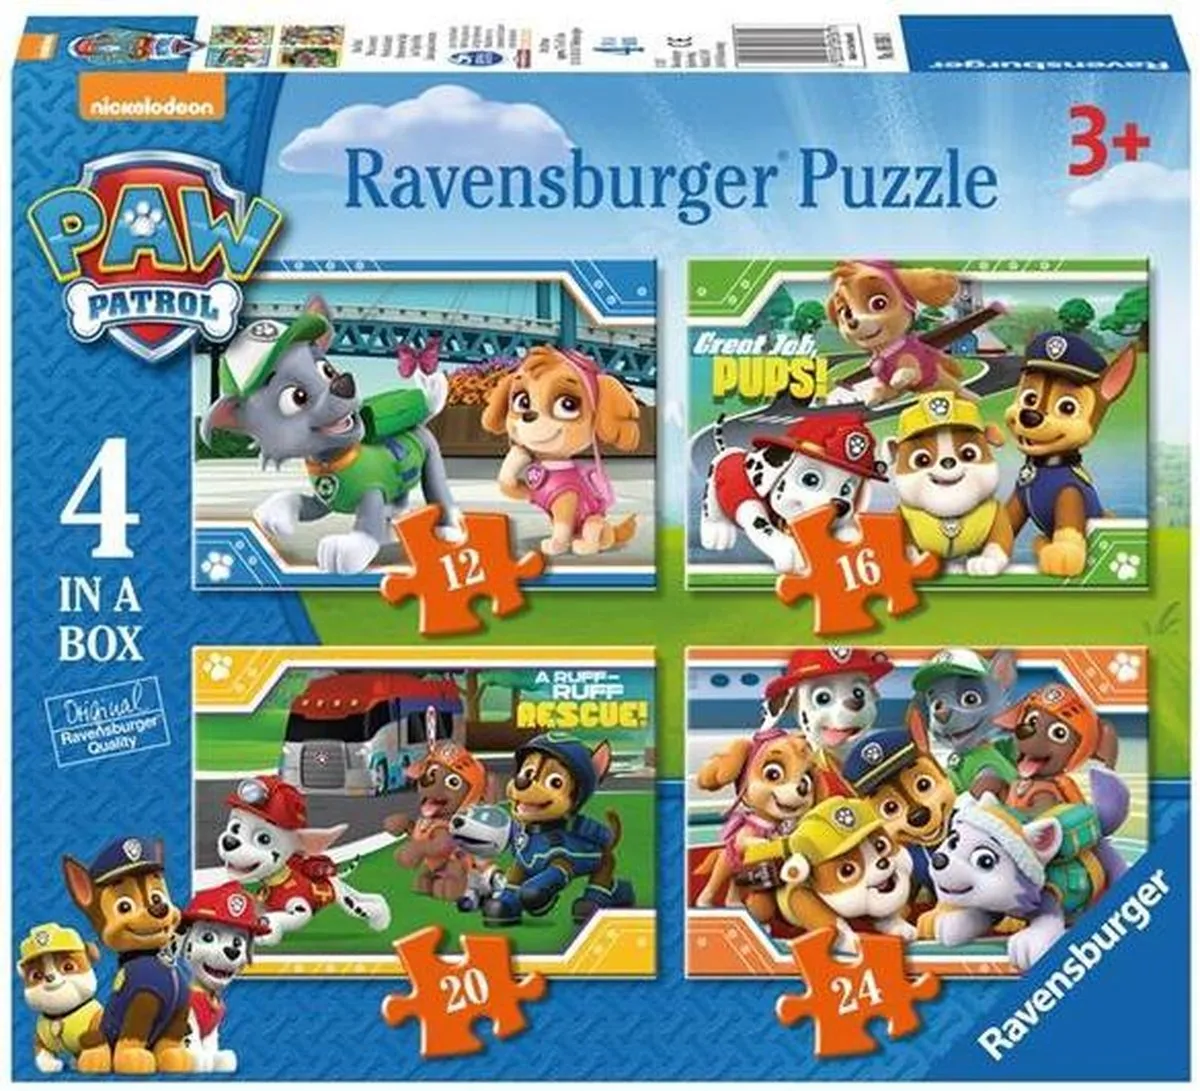 Ravensburger PAW Patrol 4in1box puzzel - 12+16+20+24 stukjes - kinderpuzzel speelgoed